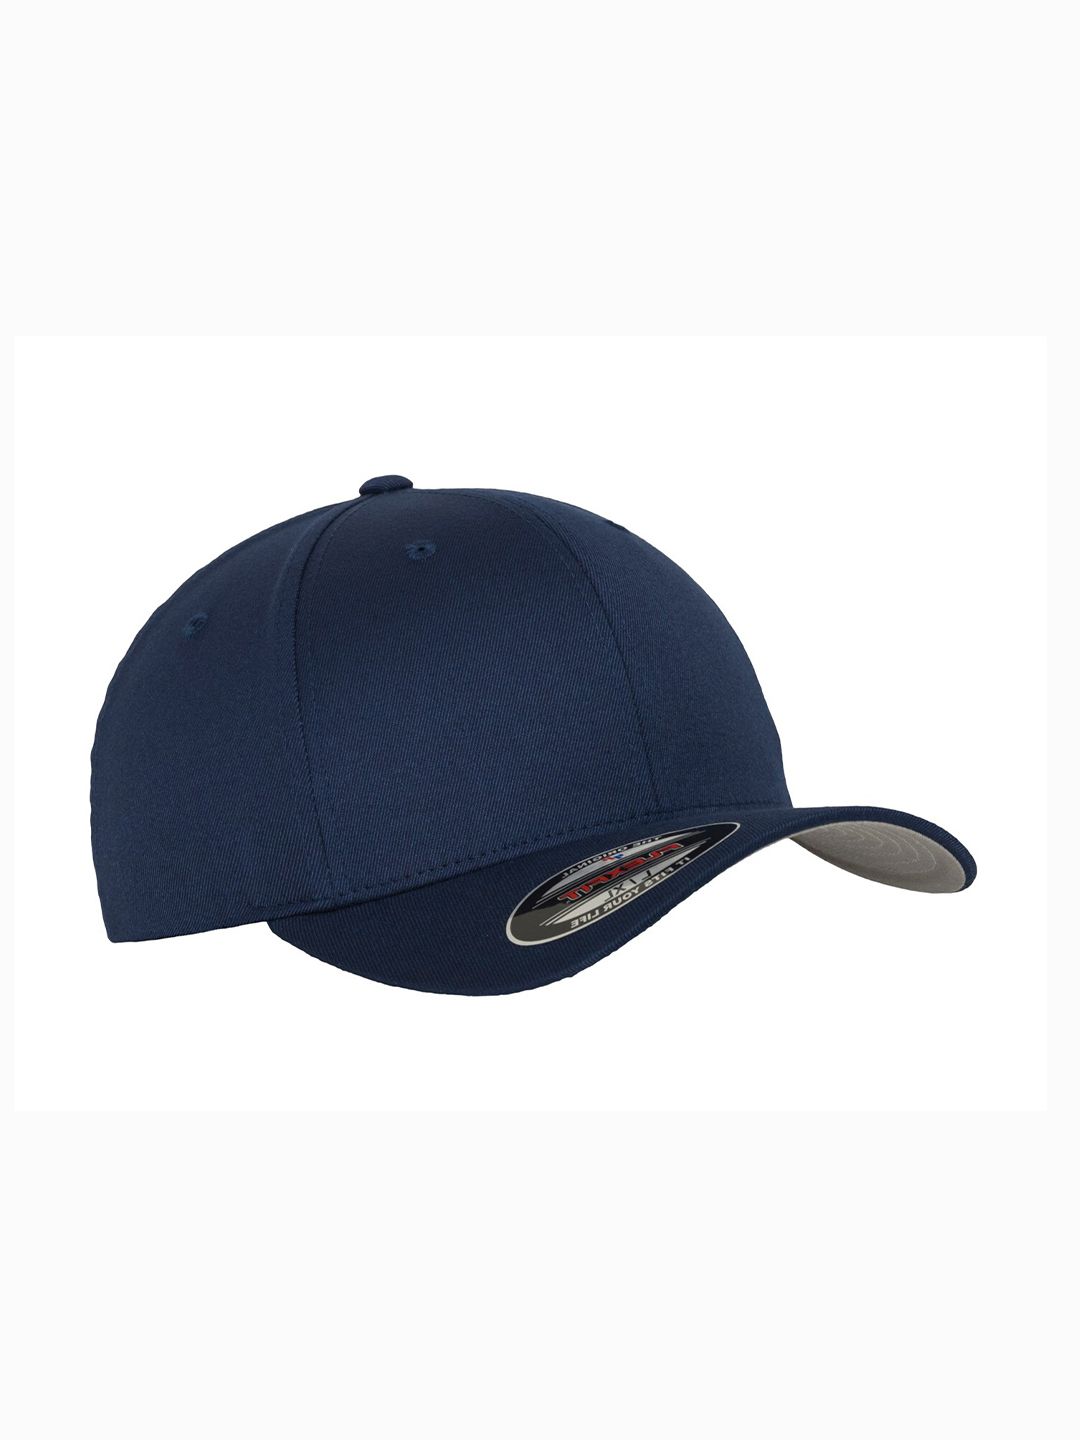 FLEXFIT Unisex Navy Blue & Black Baseball Cap Price in India